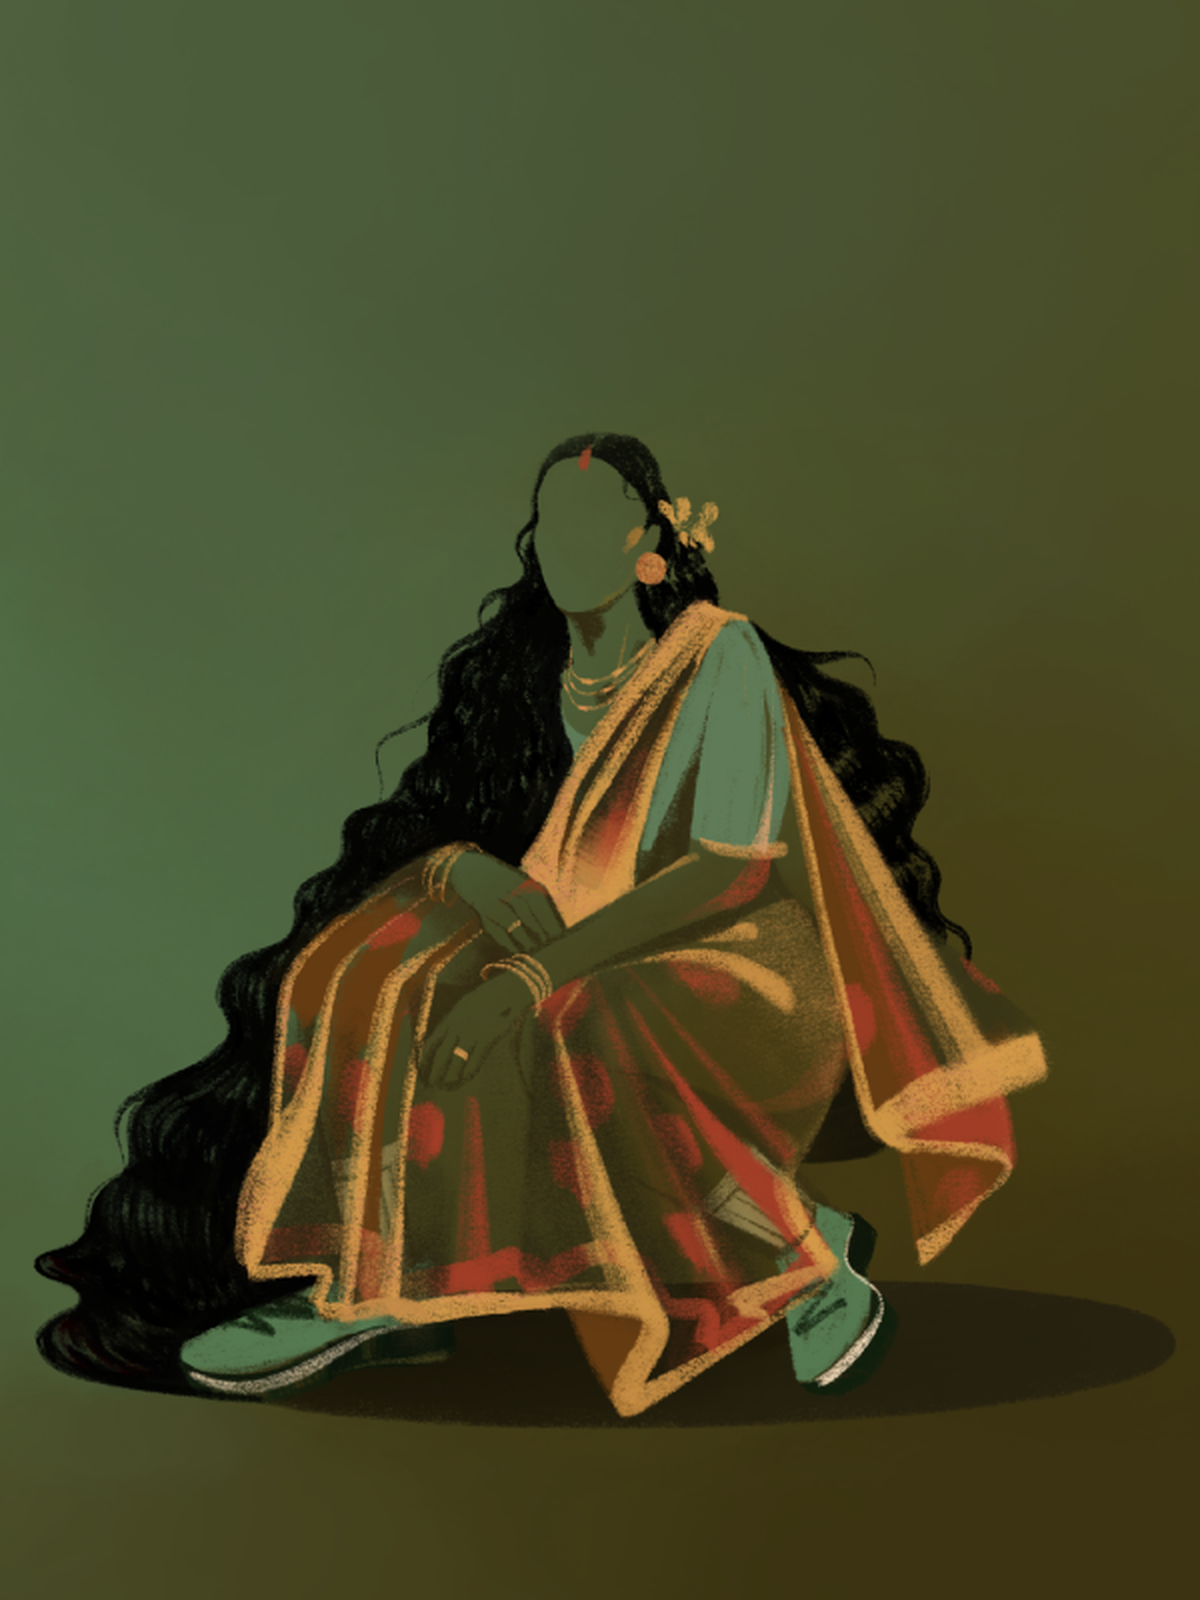 ‘Sit like a lady’ by Anjali Chandrashekar for Ode to India